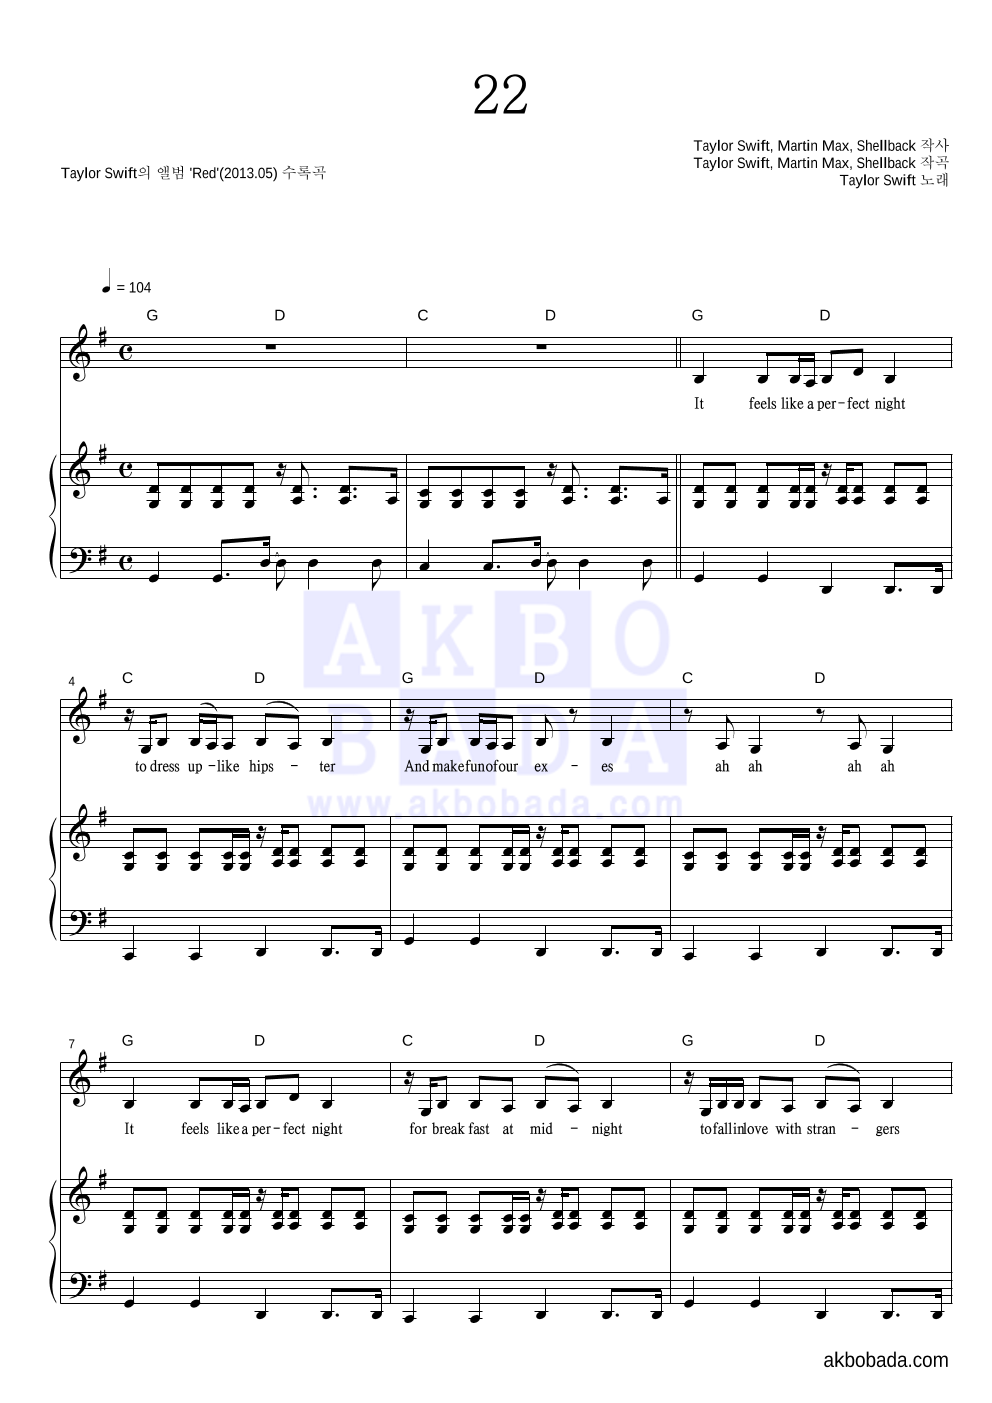 Taylor Swift - 22 피아노 3단 악보 